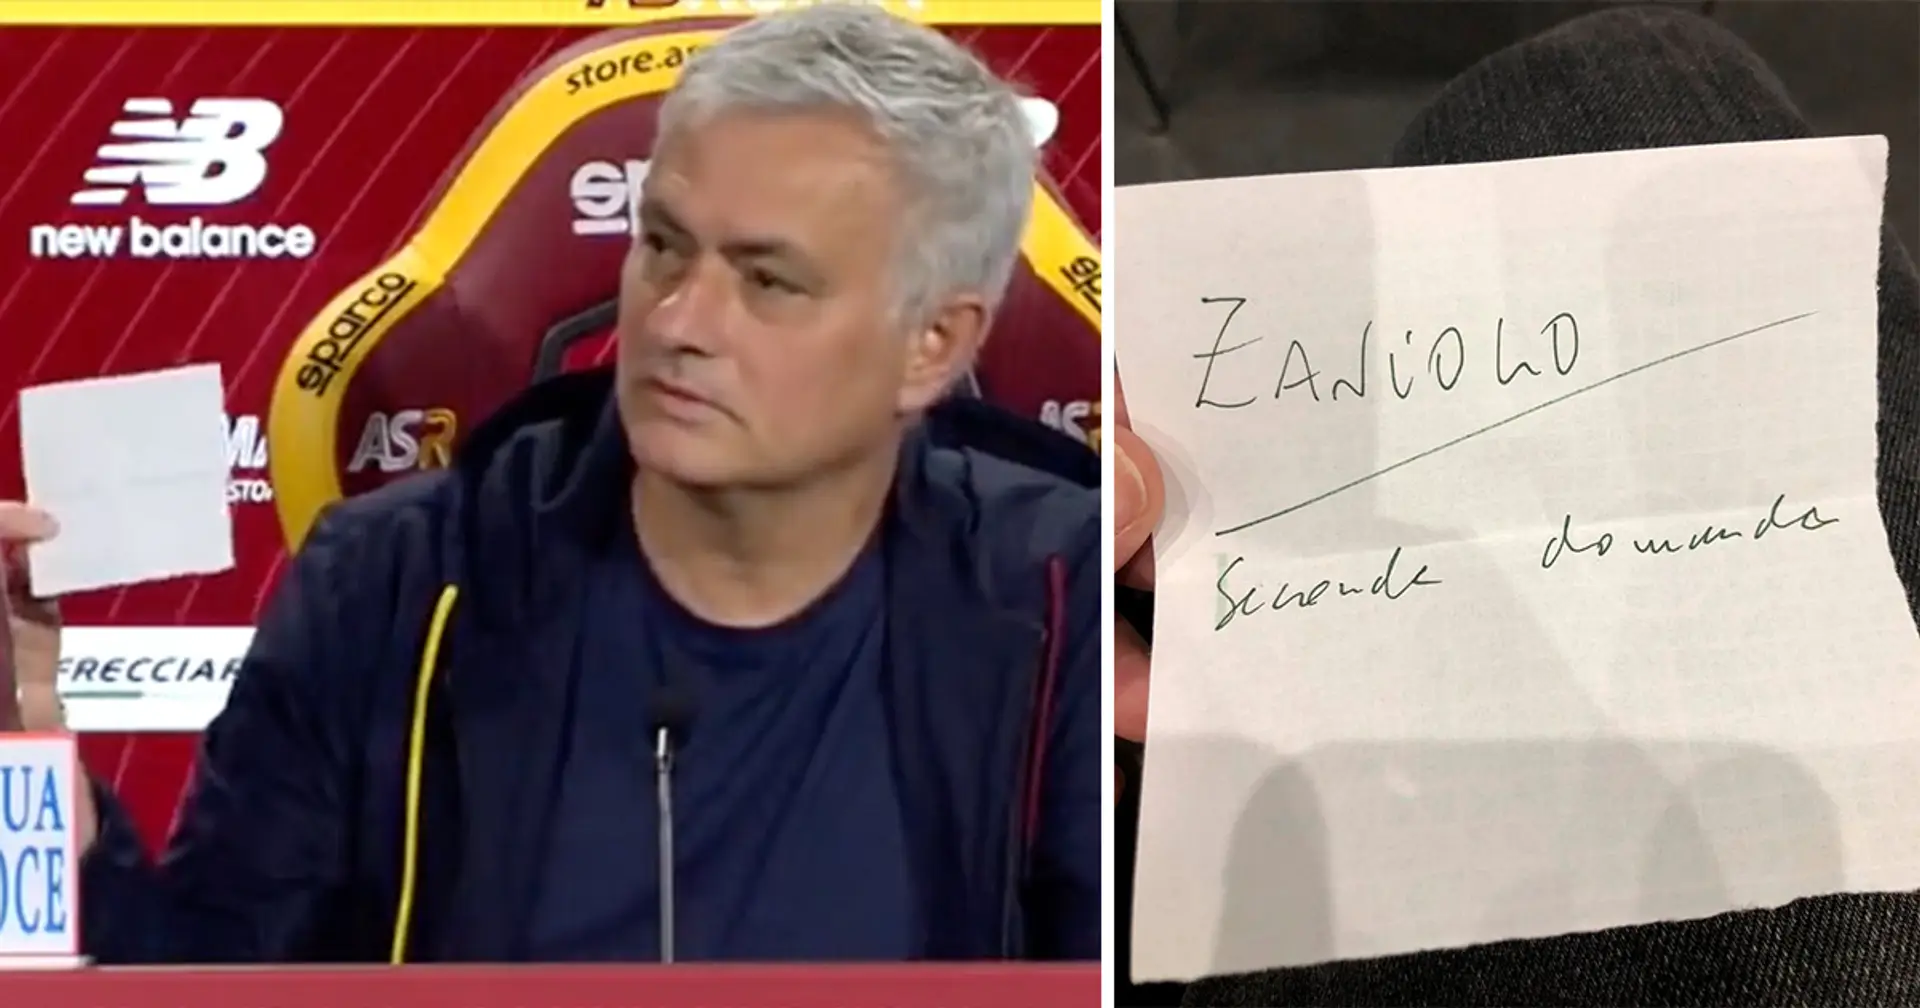 'Zaniolo - second question': Jose Mourinho shocks everyone as he predicted question about Nico Zaniolo on paper 